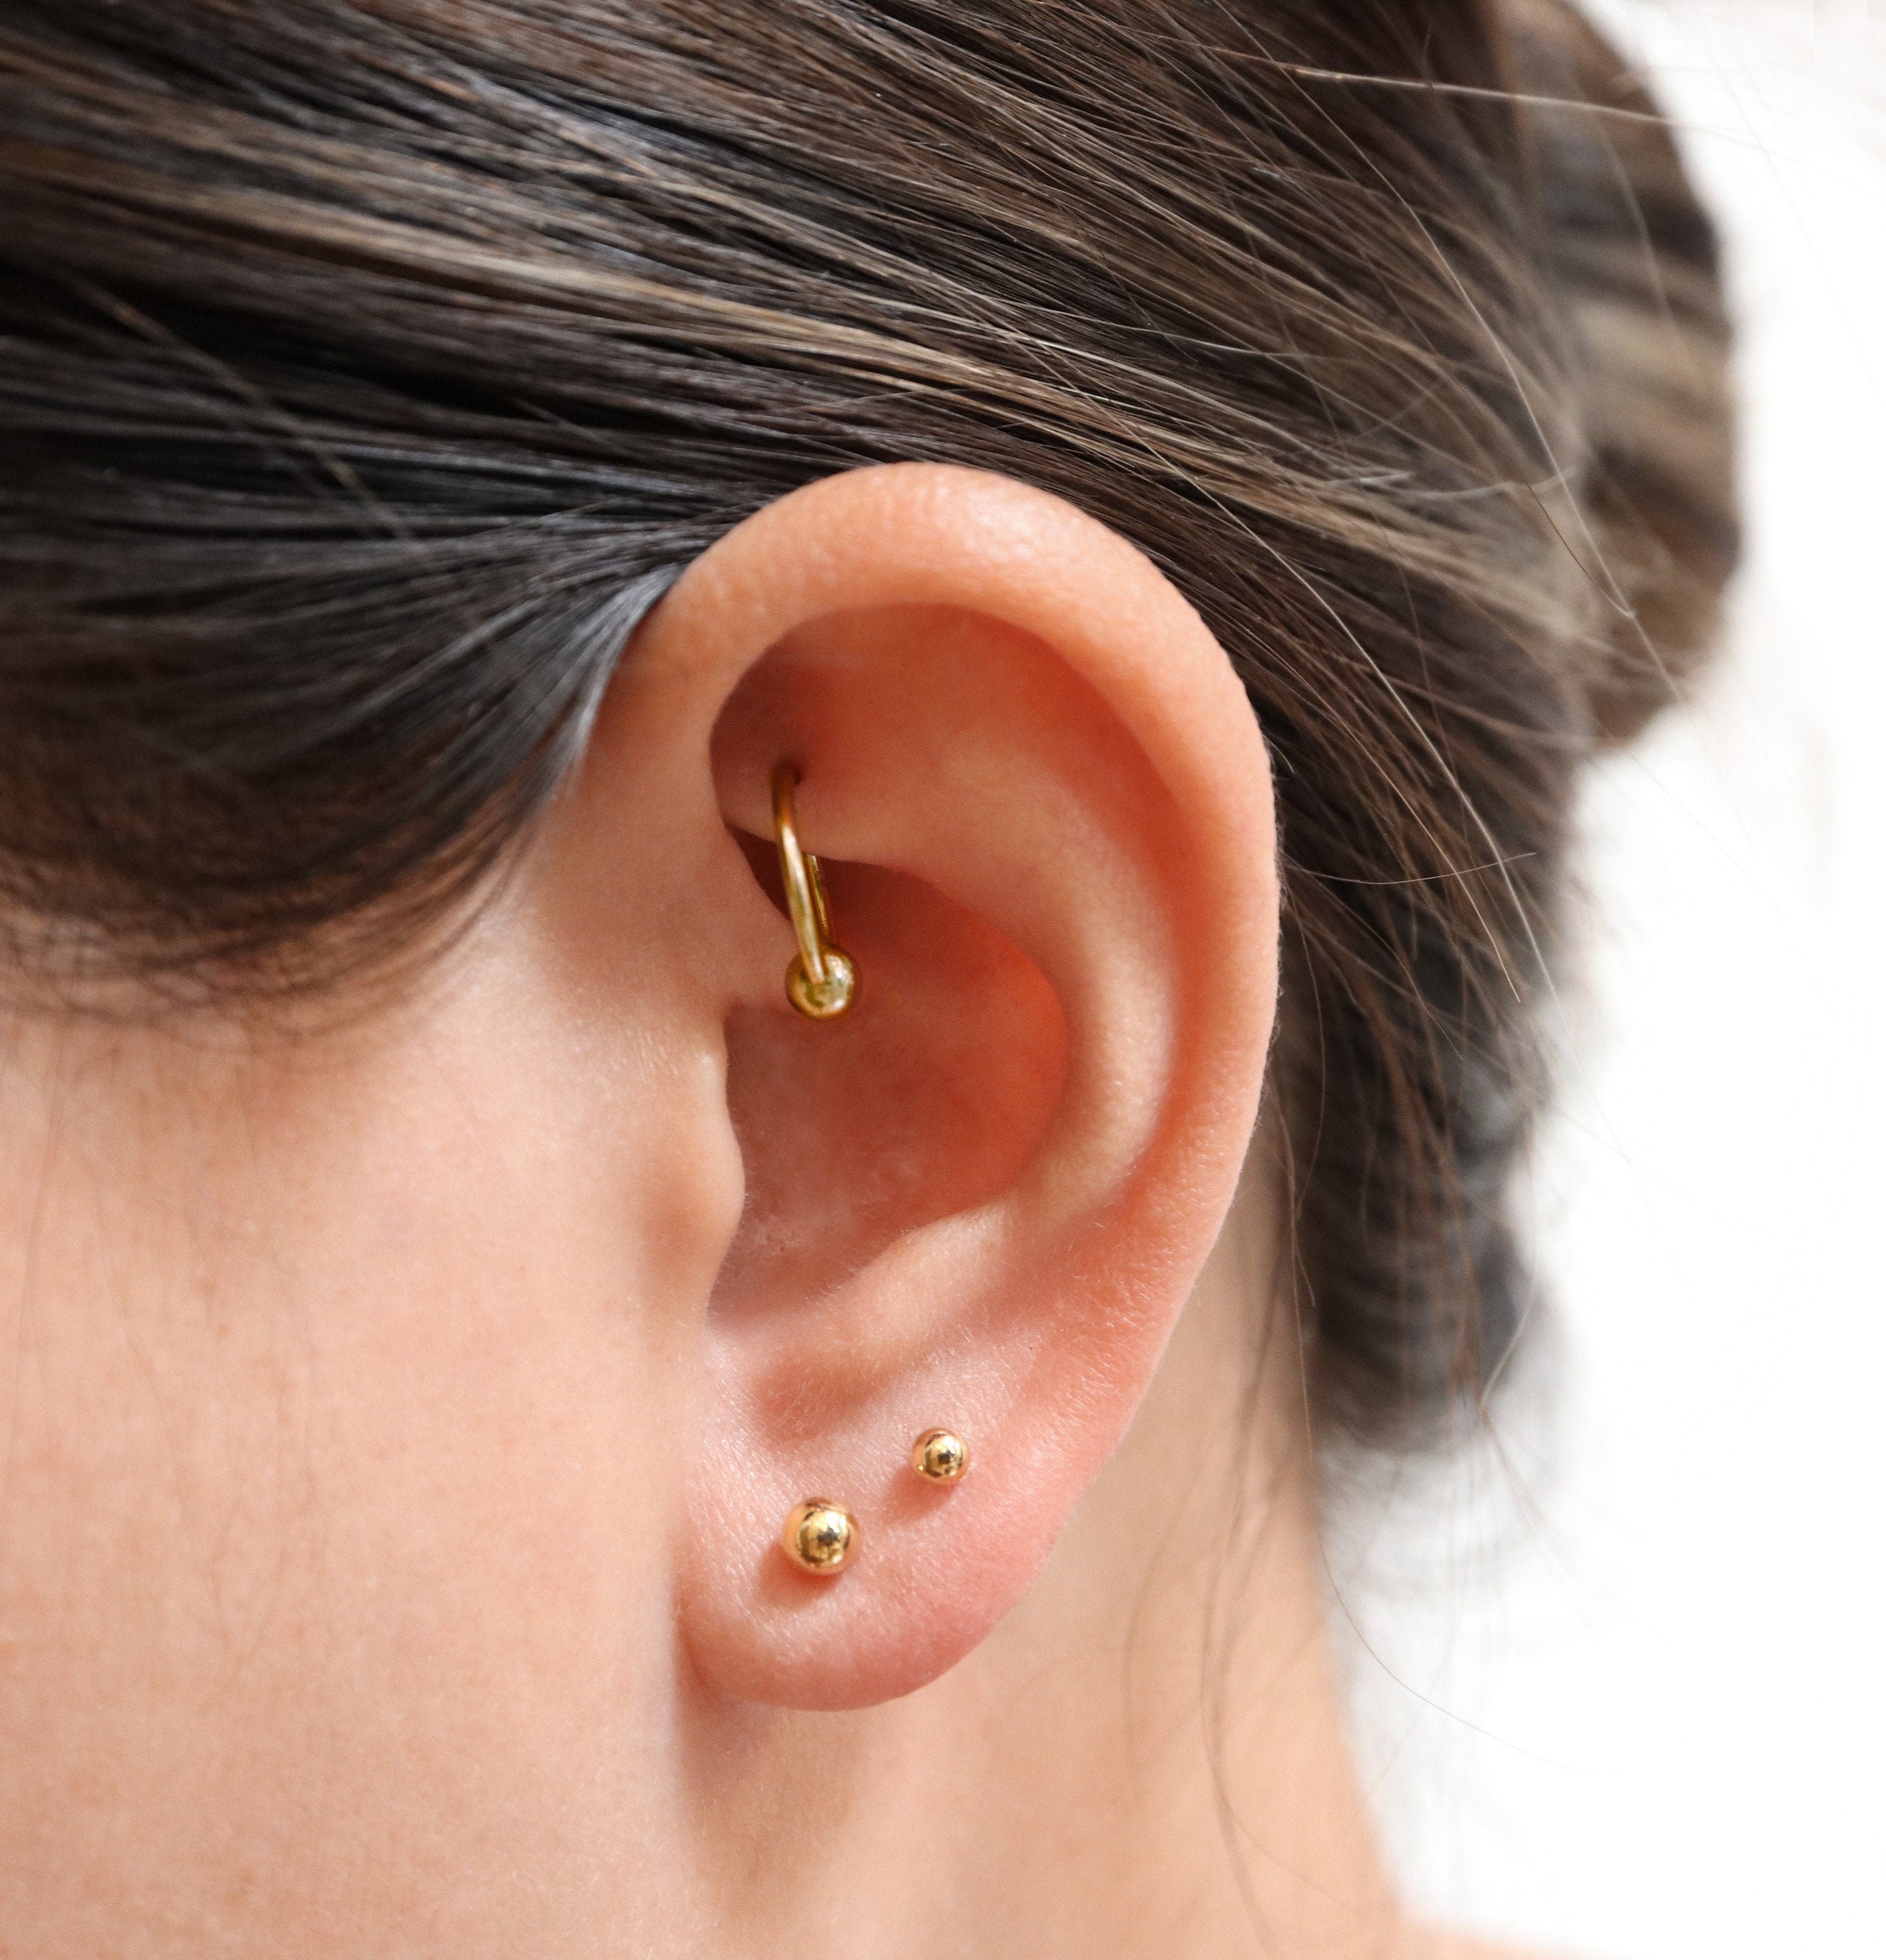 4mm 14K Gold Ball Stud Earrings | The Jewelry Vine